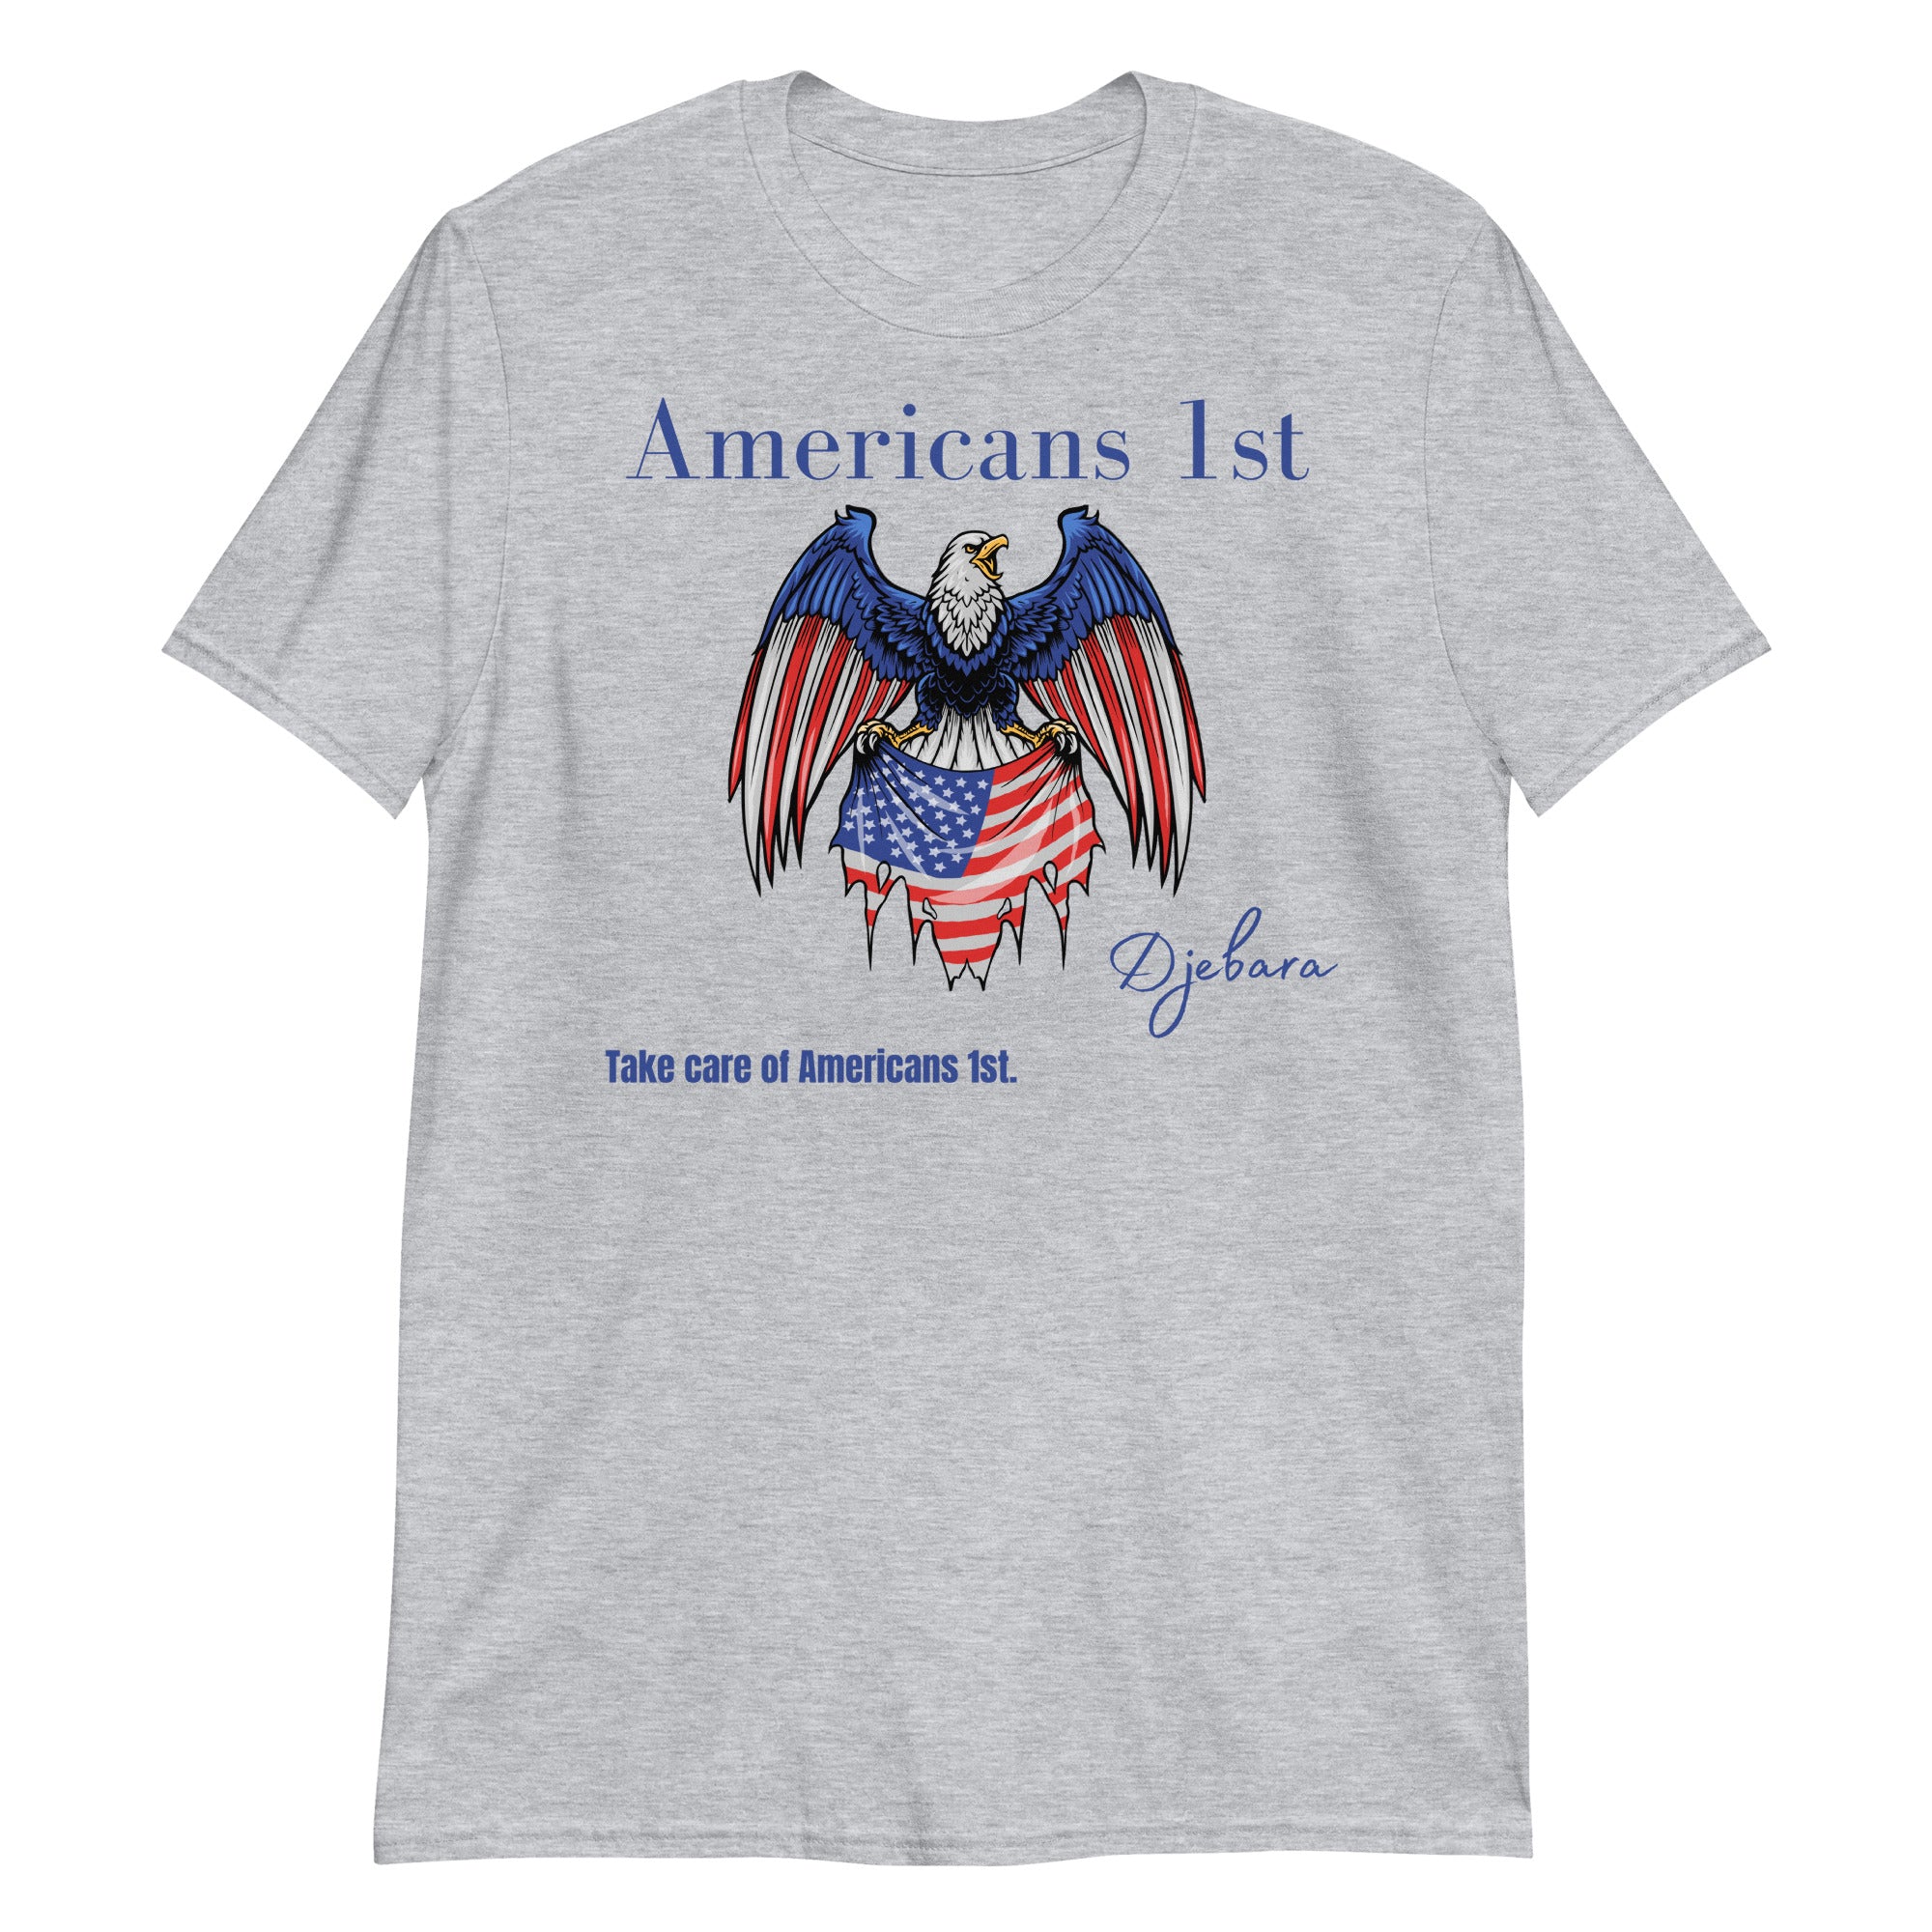 Sport Grey Americans 1st Short-Sleeve Gildan Unisex T-Shirt (Eagle) S-3XL